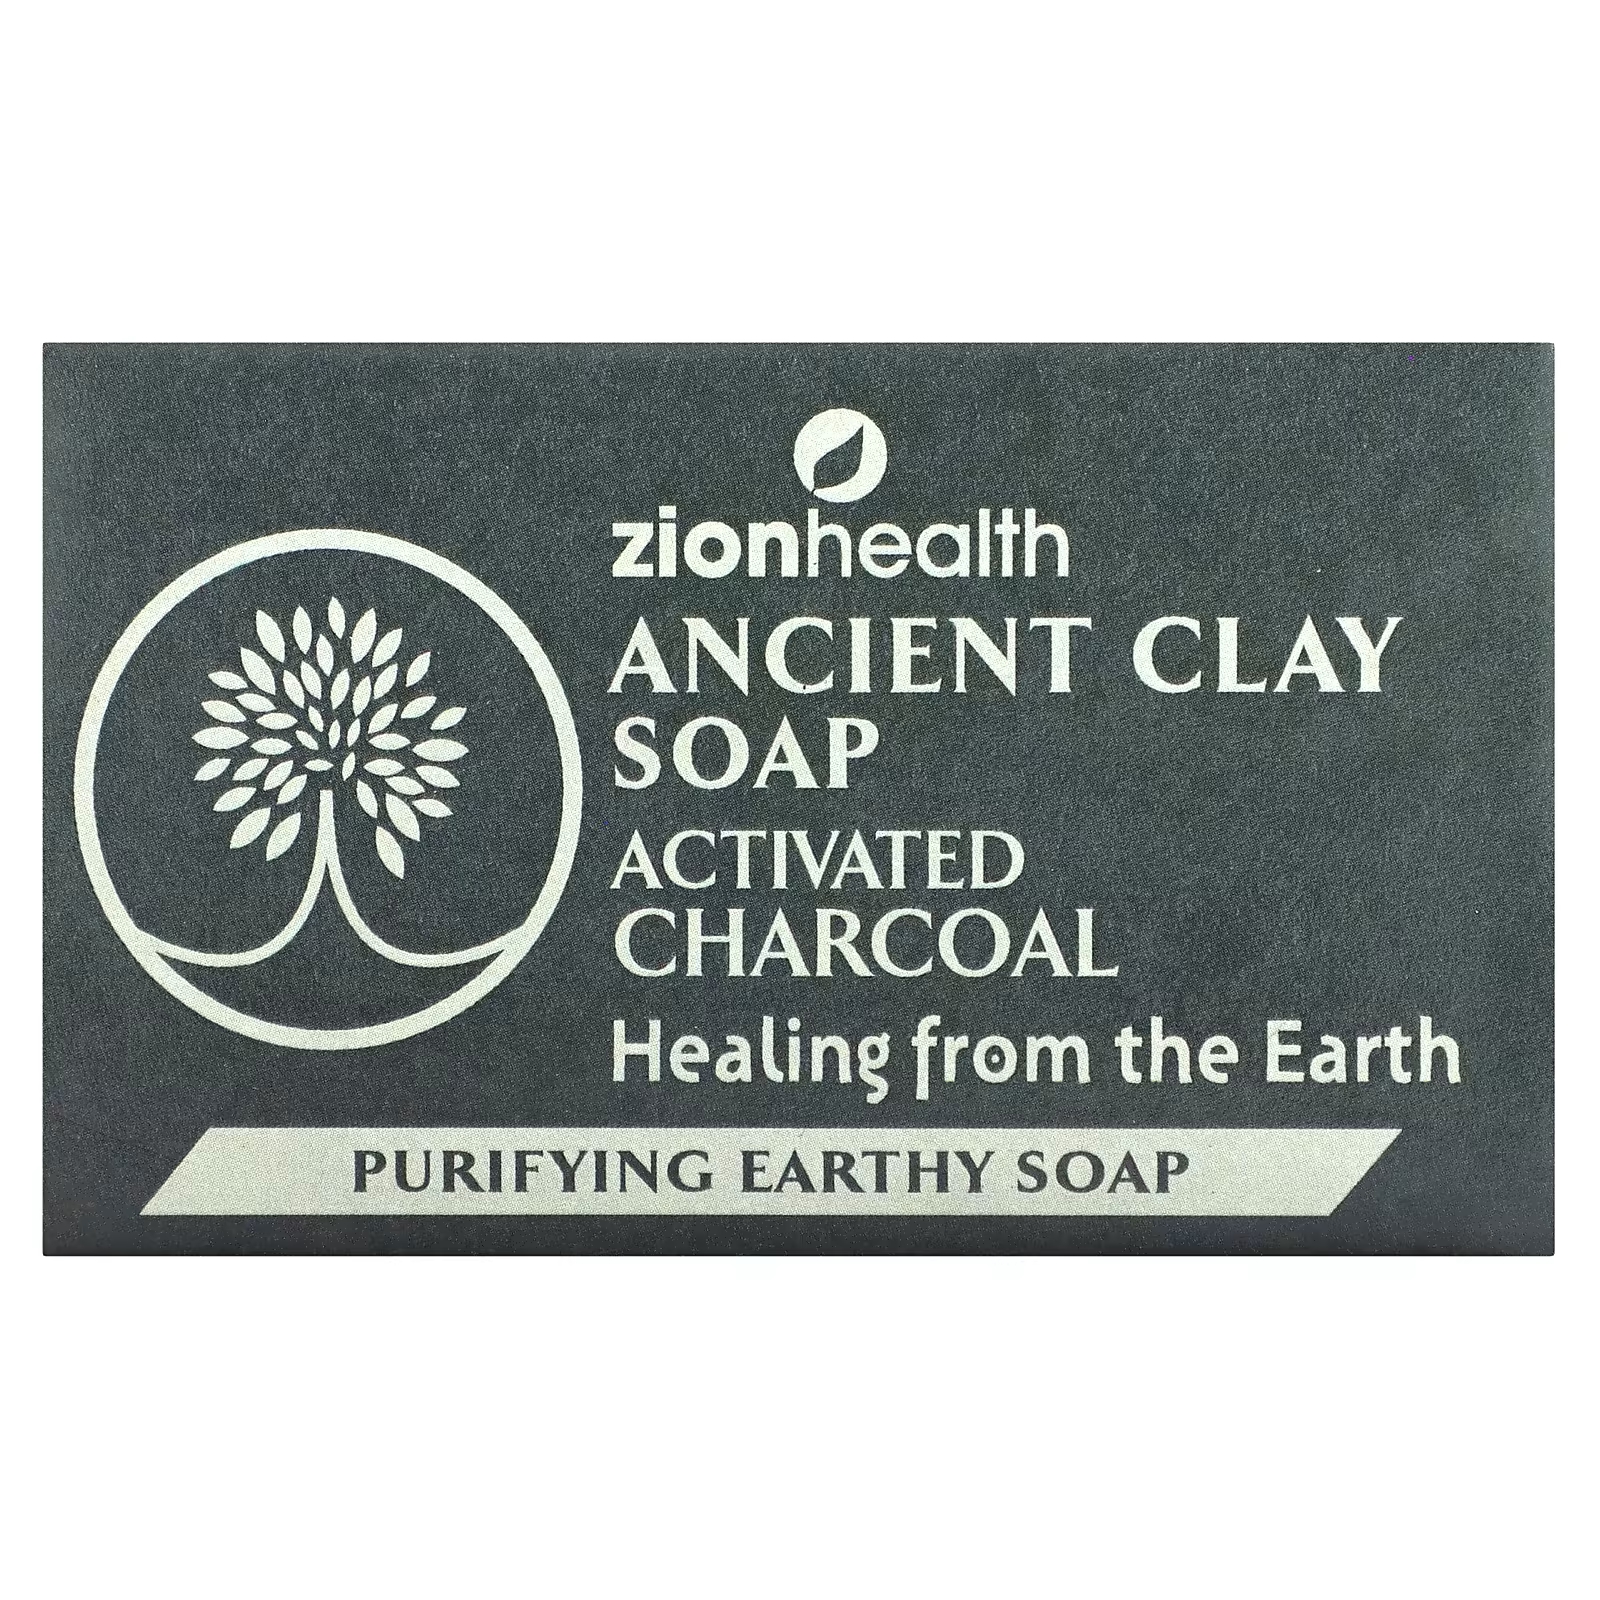 Мыло Zion Health Ancient Clay с активированным углем, 170 г zion health ancient clay soap активированный уголь 170 г 6 унций